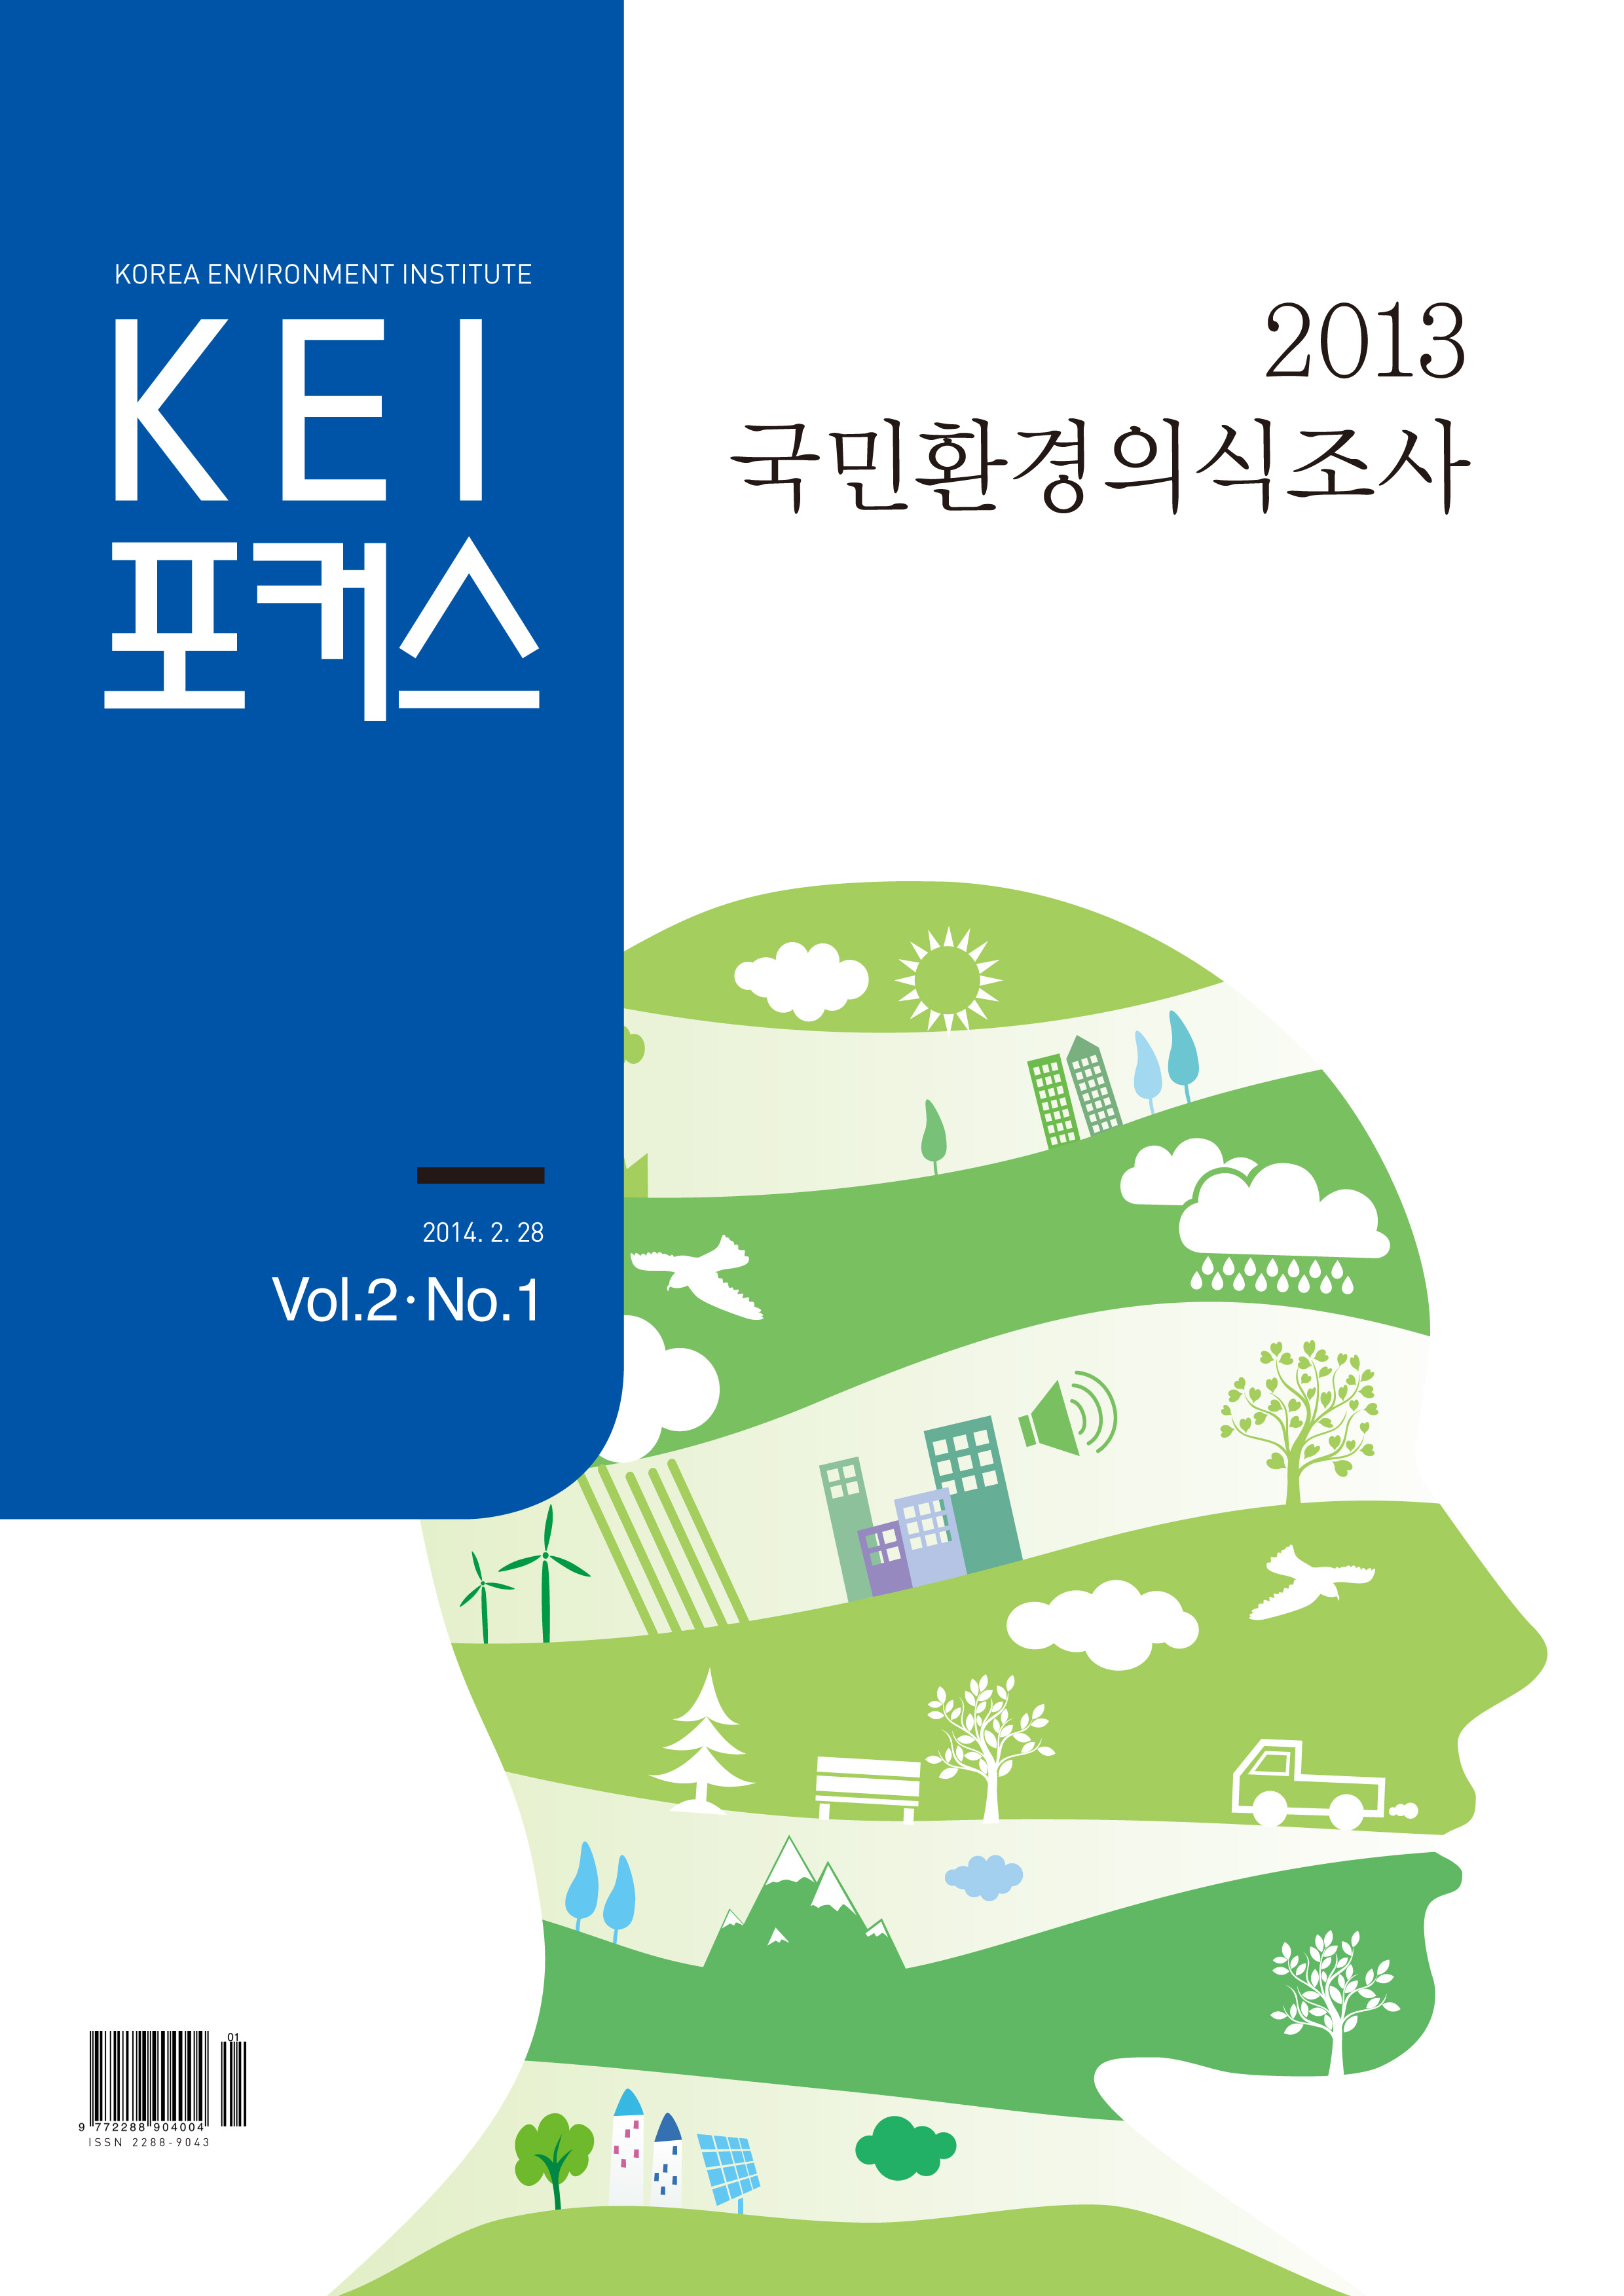 KEI 포커스 제5호 2013 국민환경의식조사에 관한 내용입니다. 자세한 내용은 아래의 글을 참고해주세요.